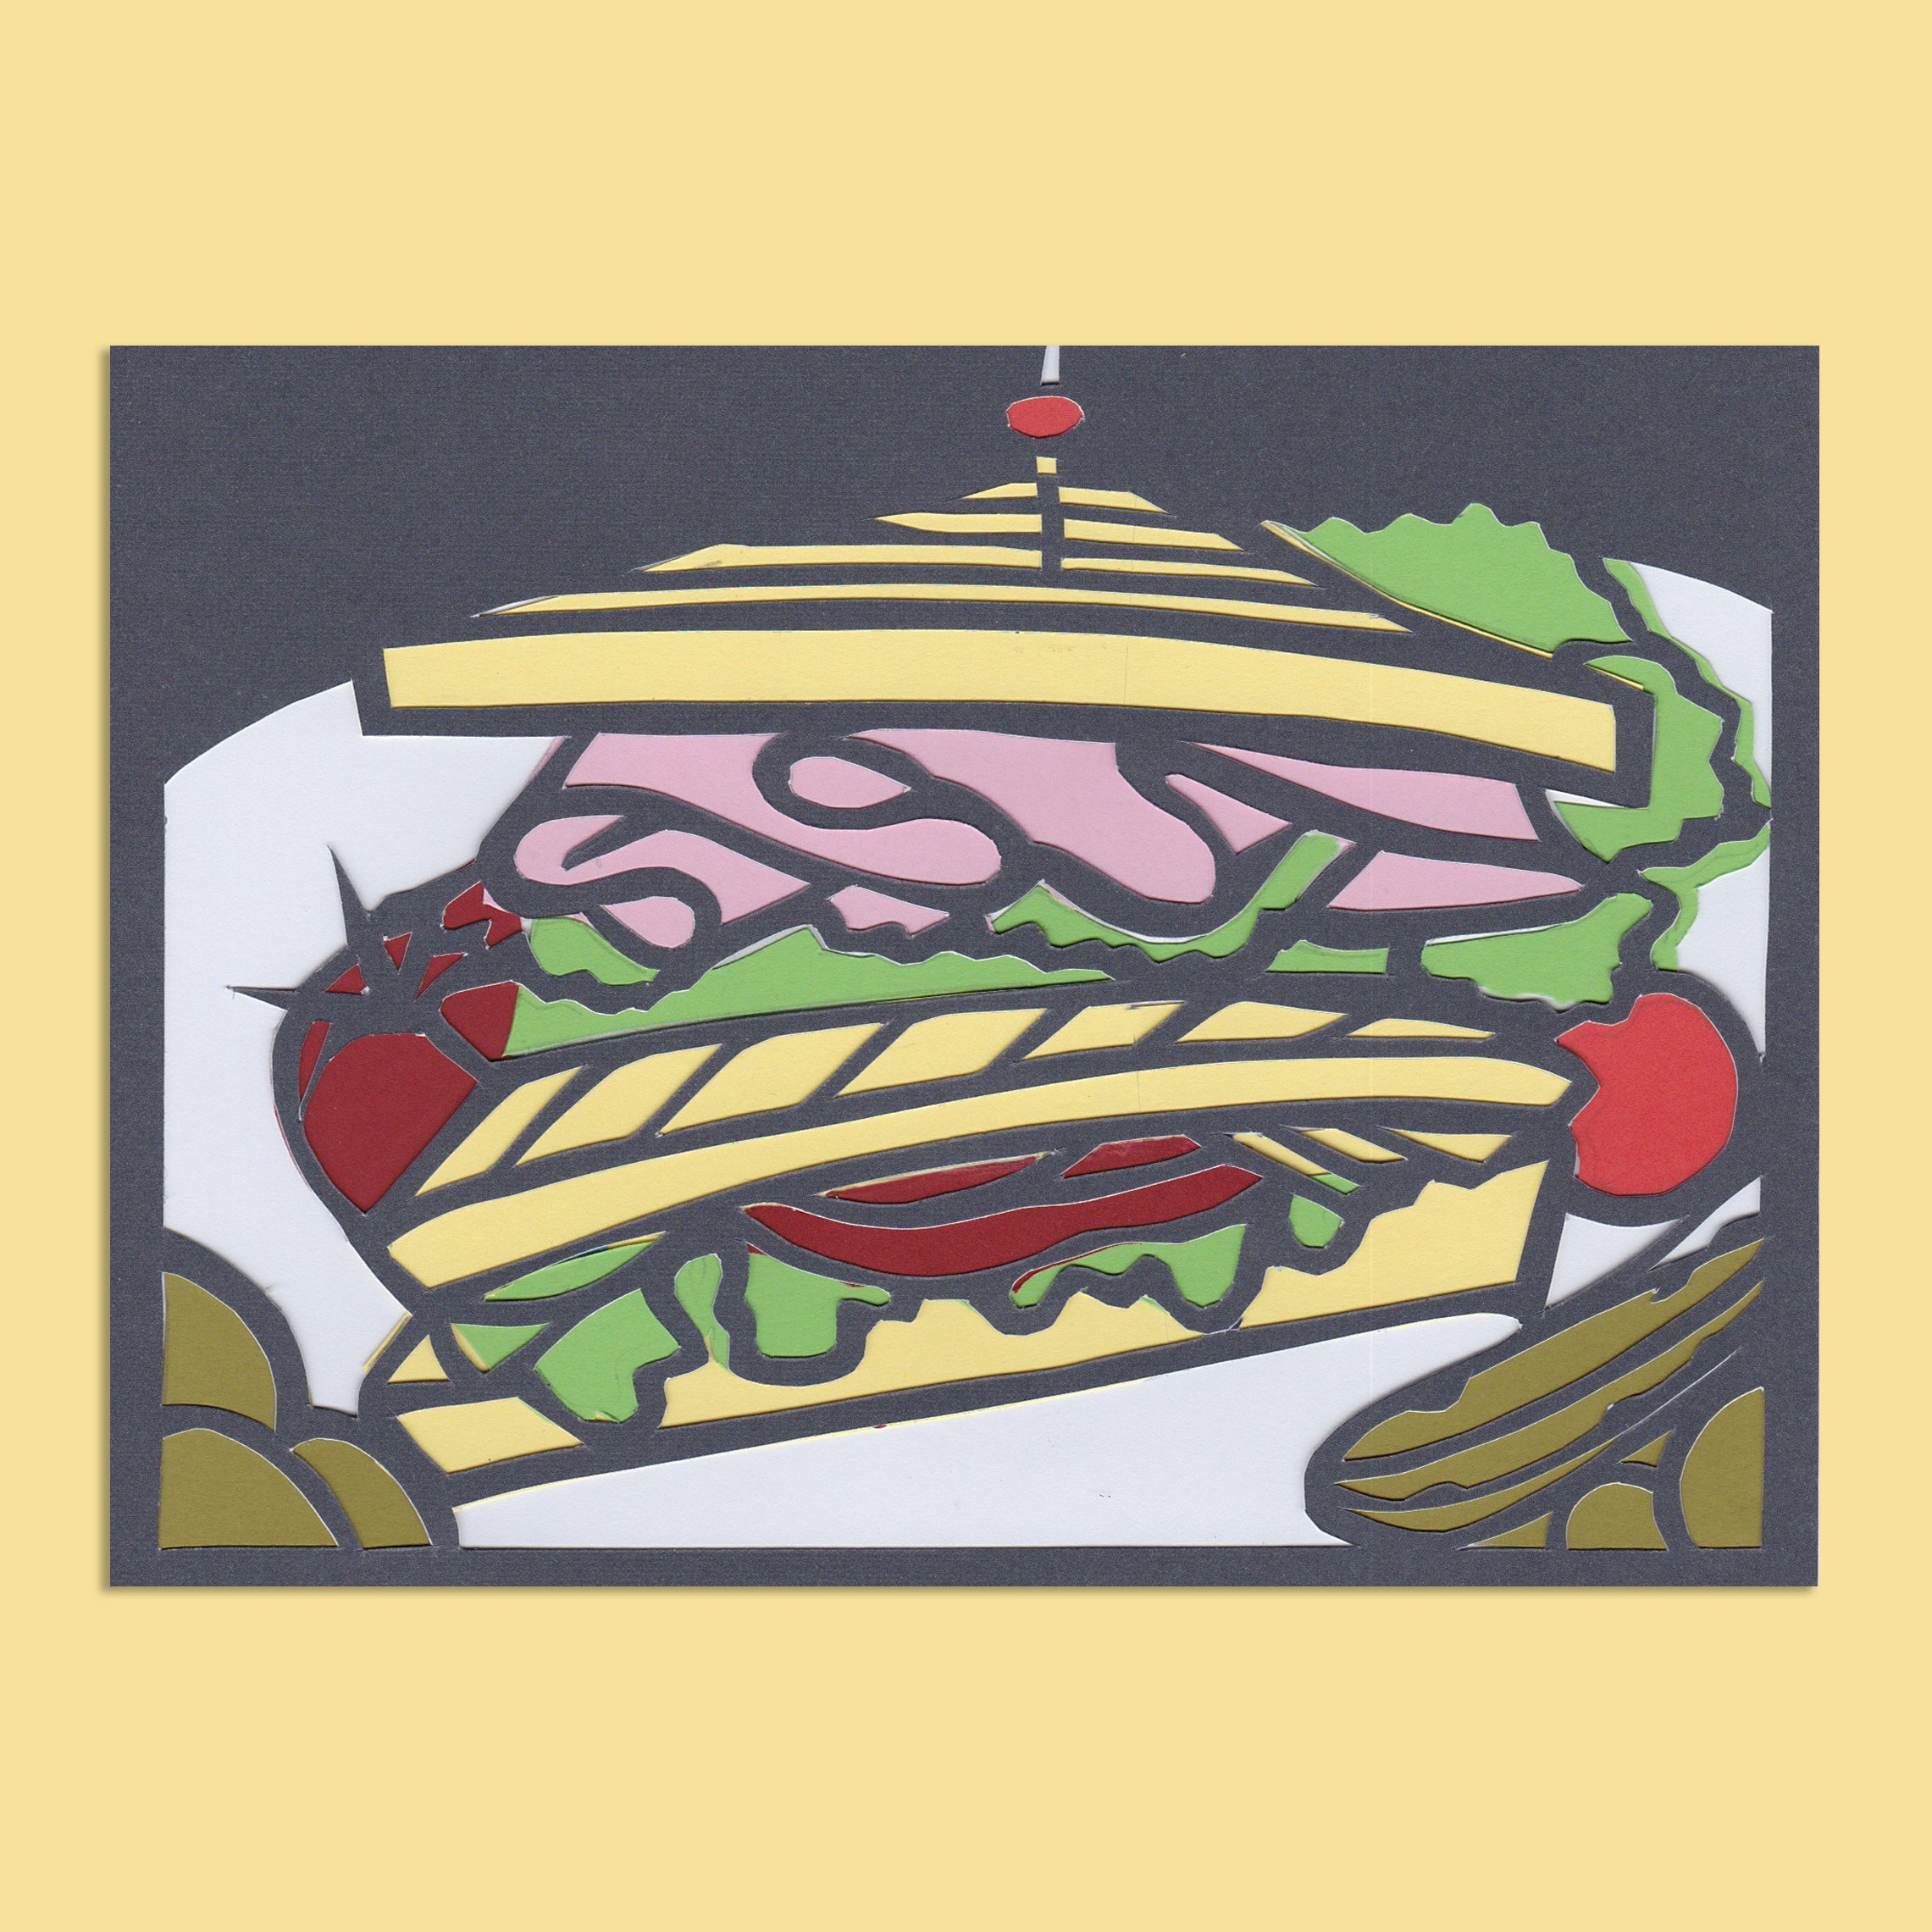 National Sandwich Month (😃)